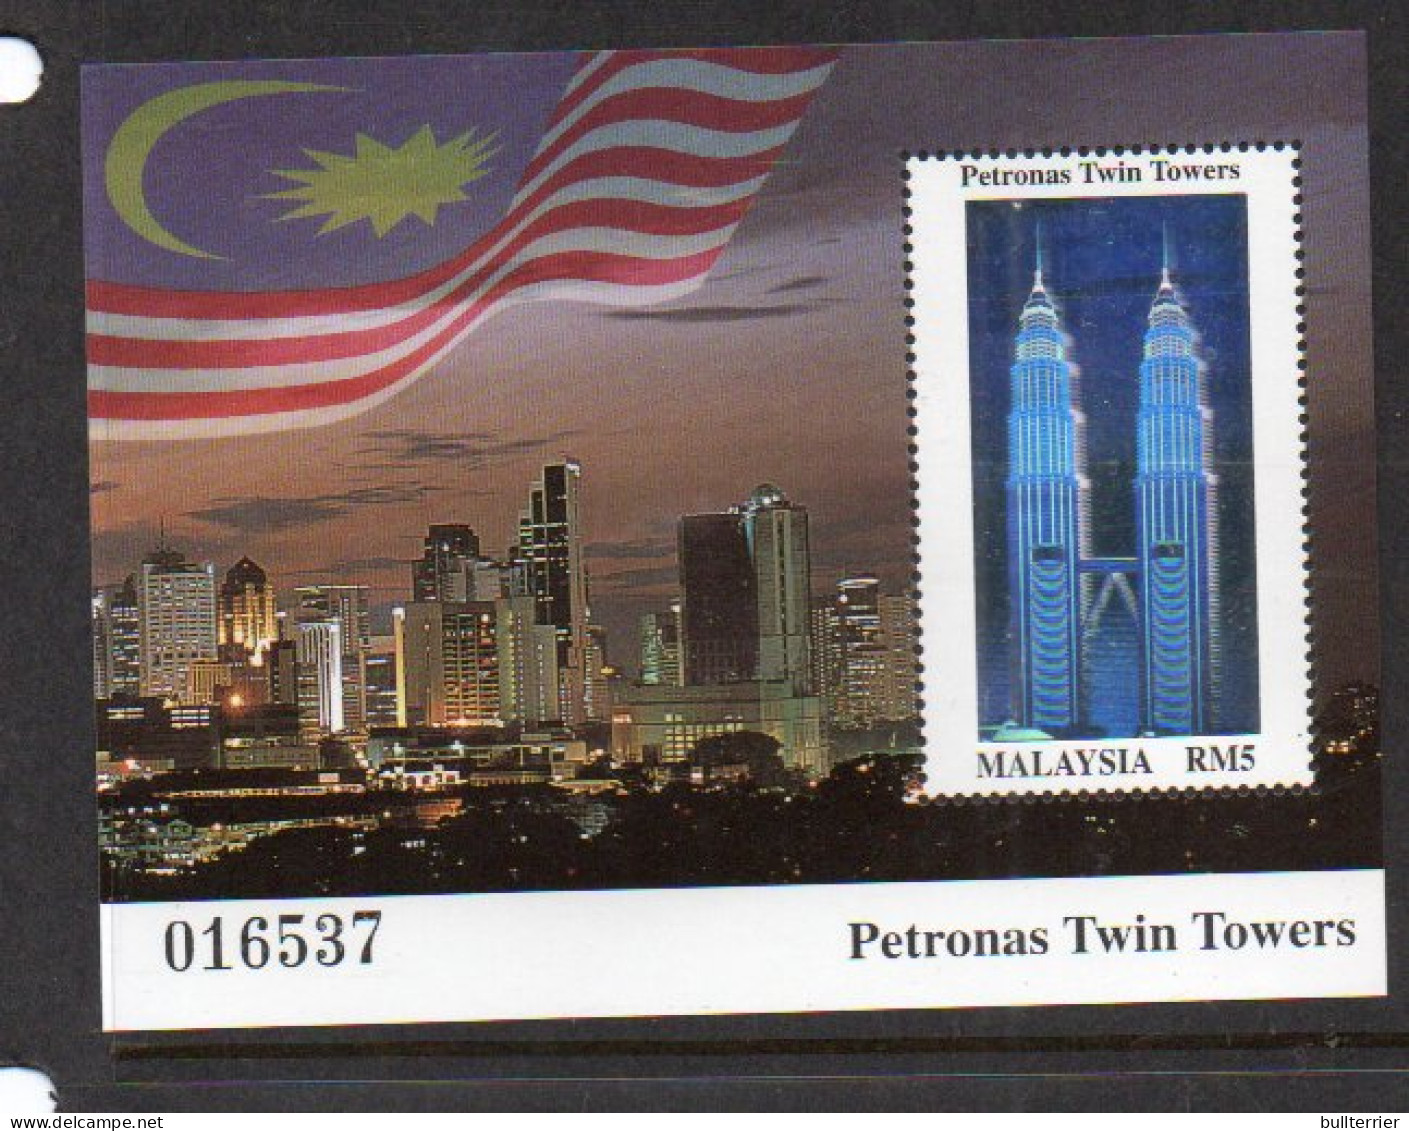 HOLOGRAMS - MALAYSIA - 1999 - PETRONAS TOWER  HOLOGRAM  SOUVENIR SHEET  MINT NEVER HINGED  - Hologramme